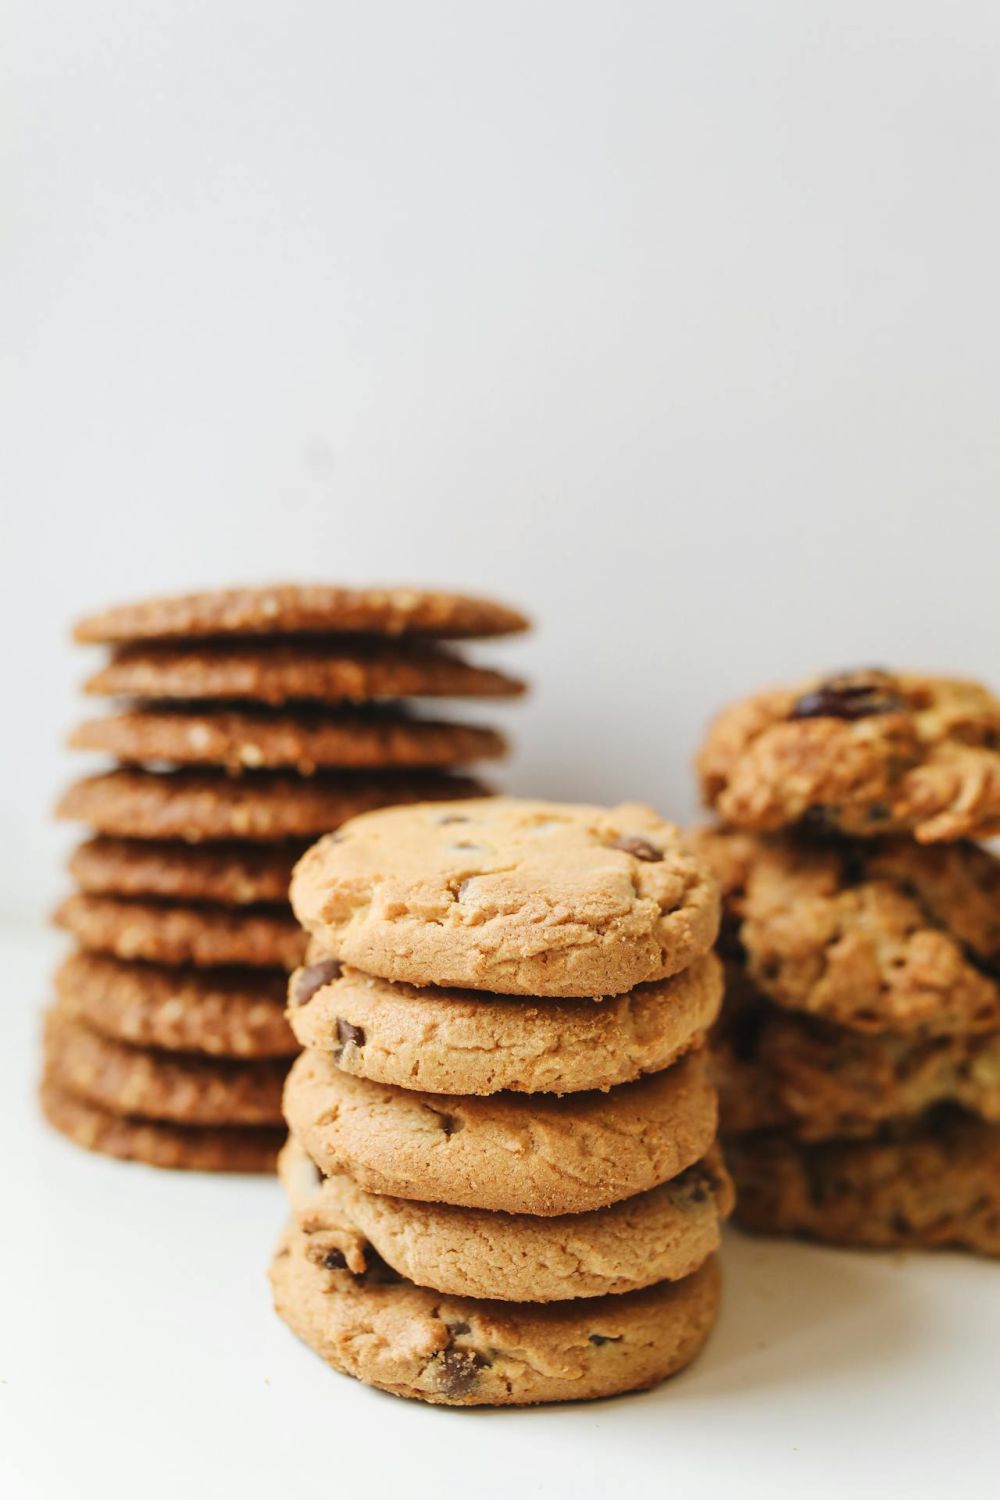 Resep Mini Cookies Choco Chips, Teksturnya Garing!